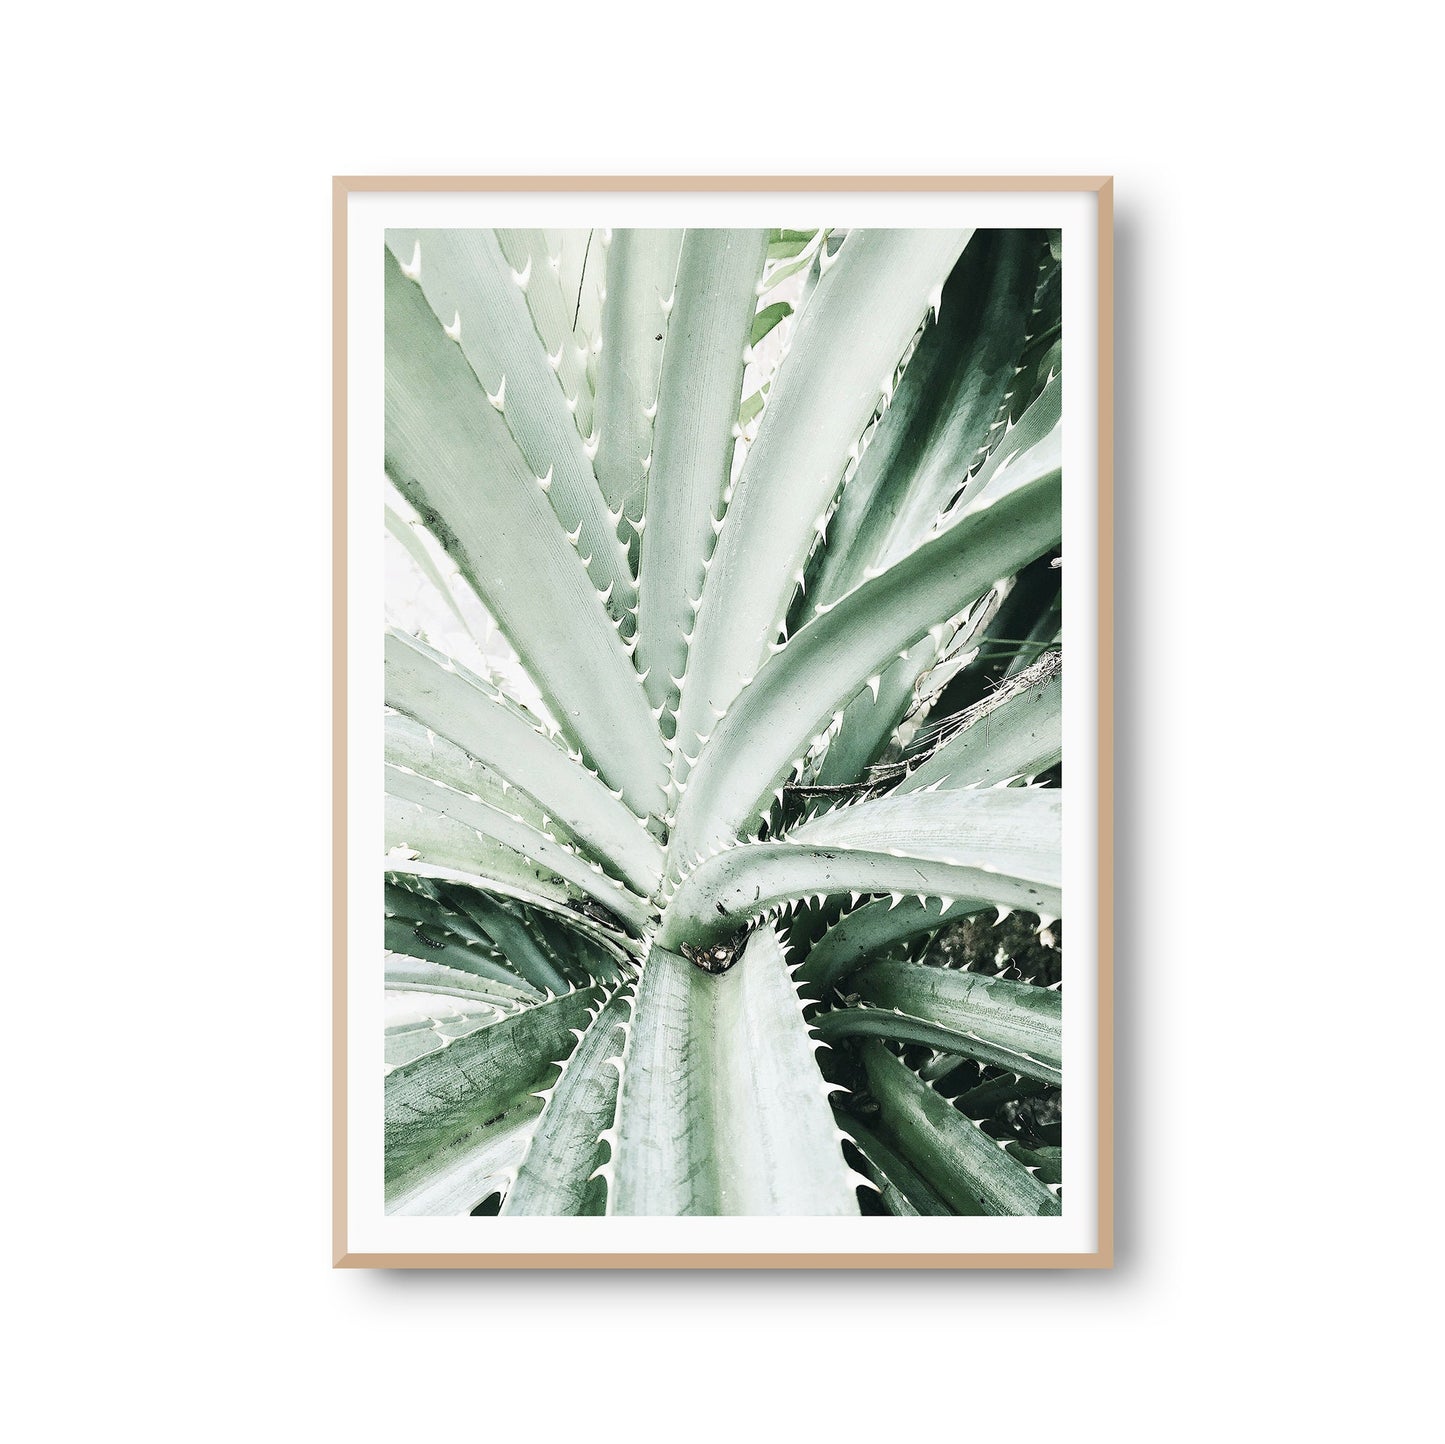 Wanddeko Poster "Kaktus" Pflanze Fotoprint Kunstdruck Bild Fotografie Print Wandbild Kunstdruck (OHNE RAHMEN)